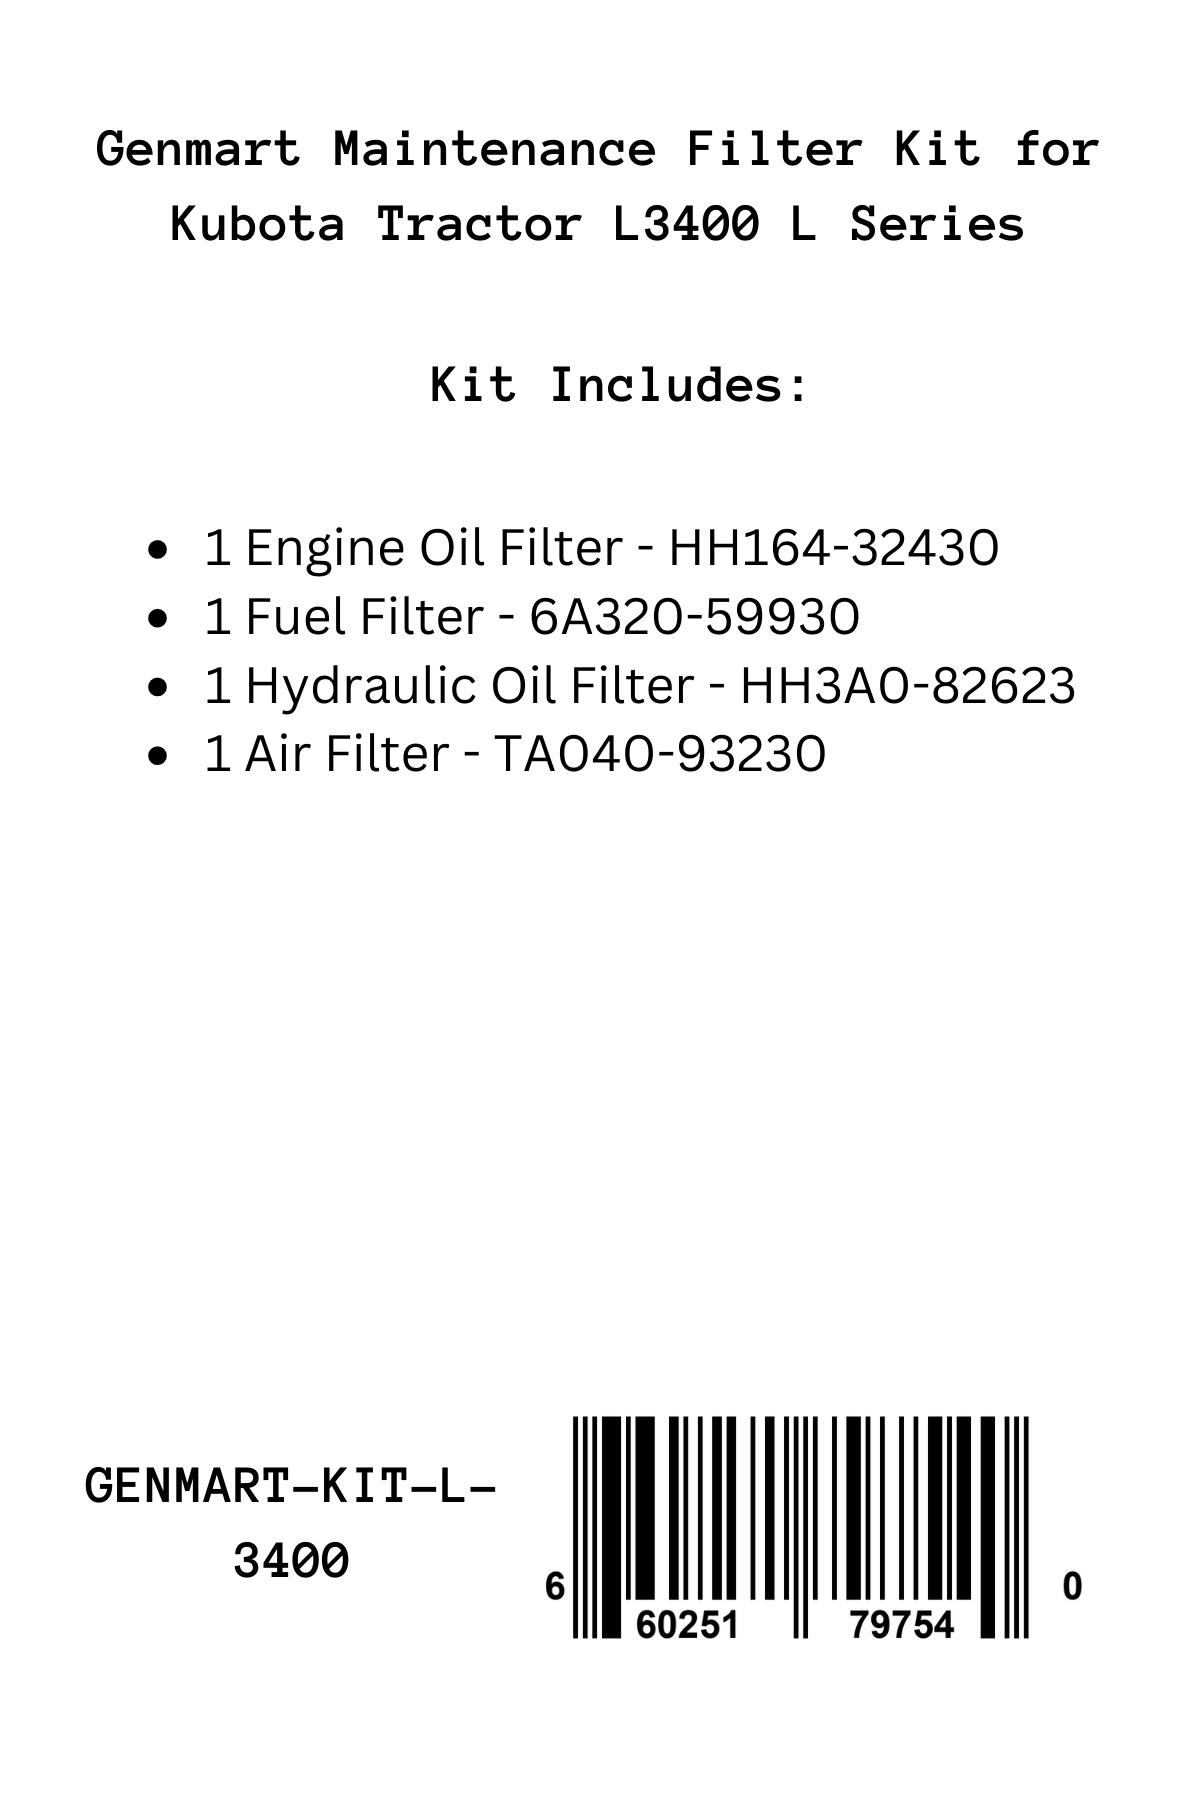 Genmart Maintenance Kit for Kubota Tractor L3400 L Series